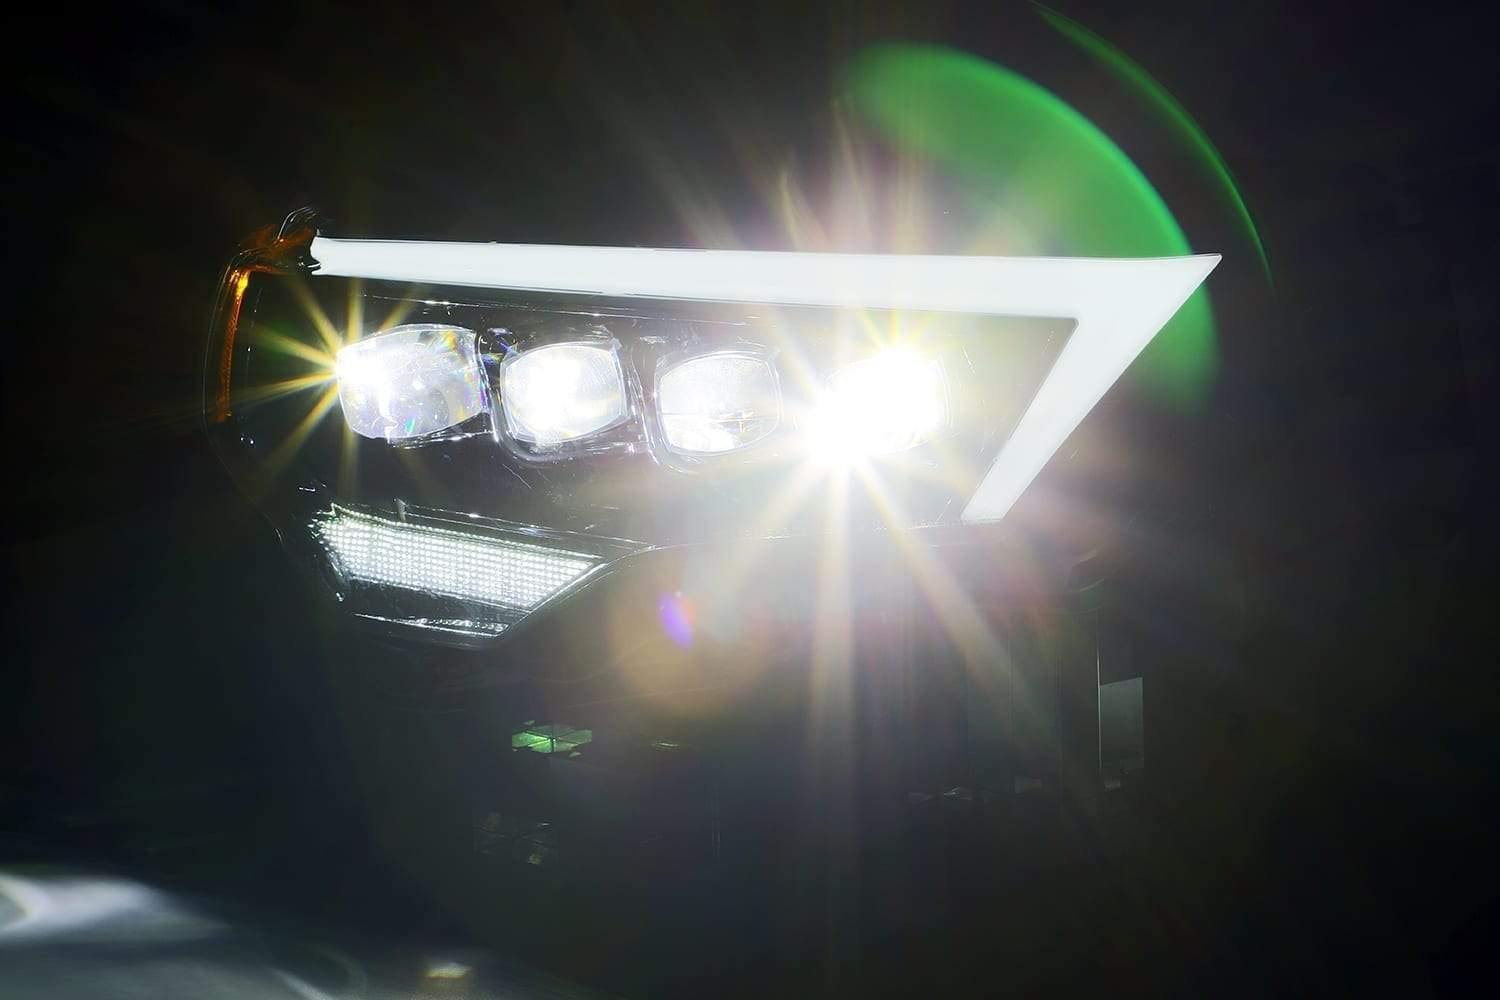 AlphaRex NOVA-Series LED Projector Headlights Chrome 2014+ Toyota 4Runner - Yota Nation